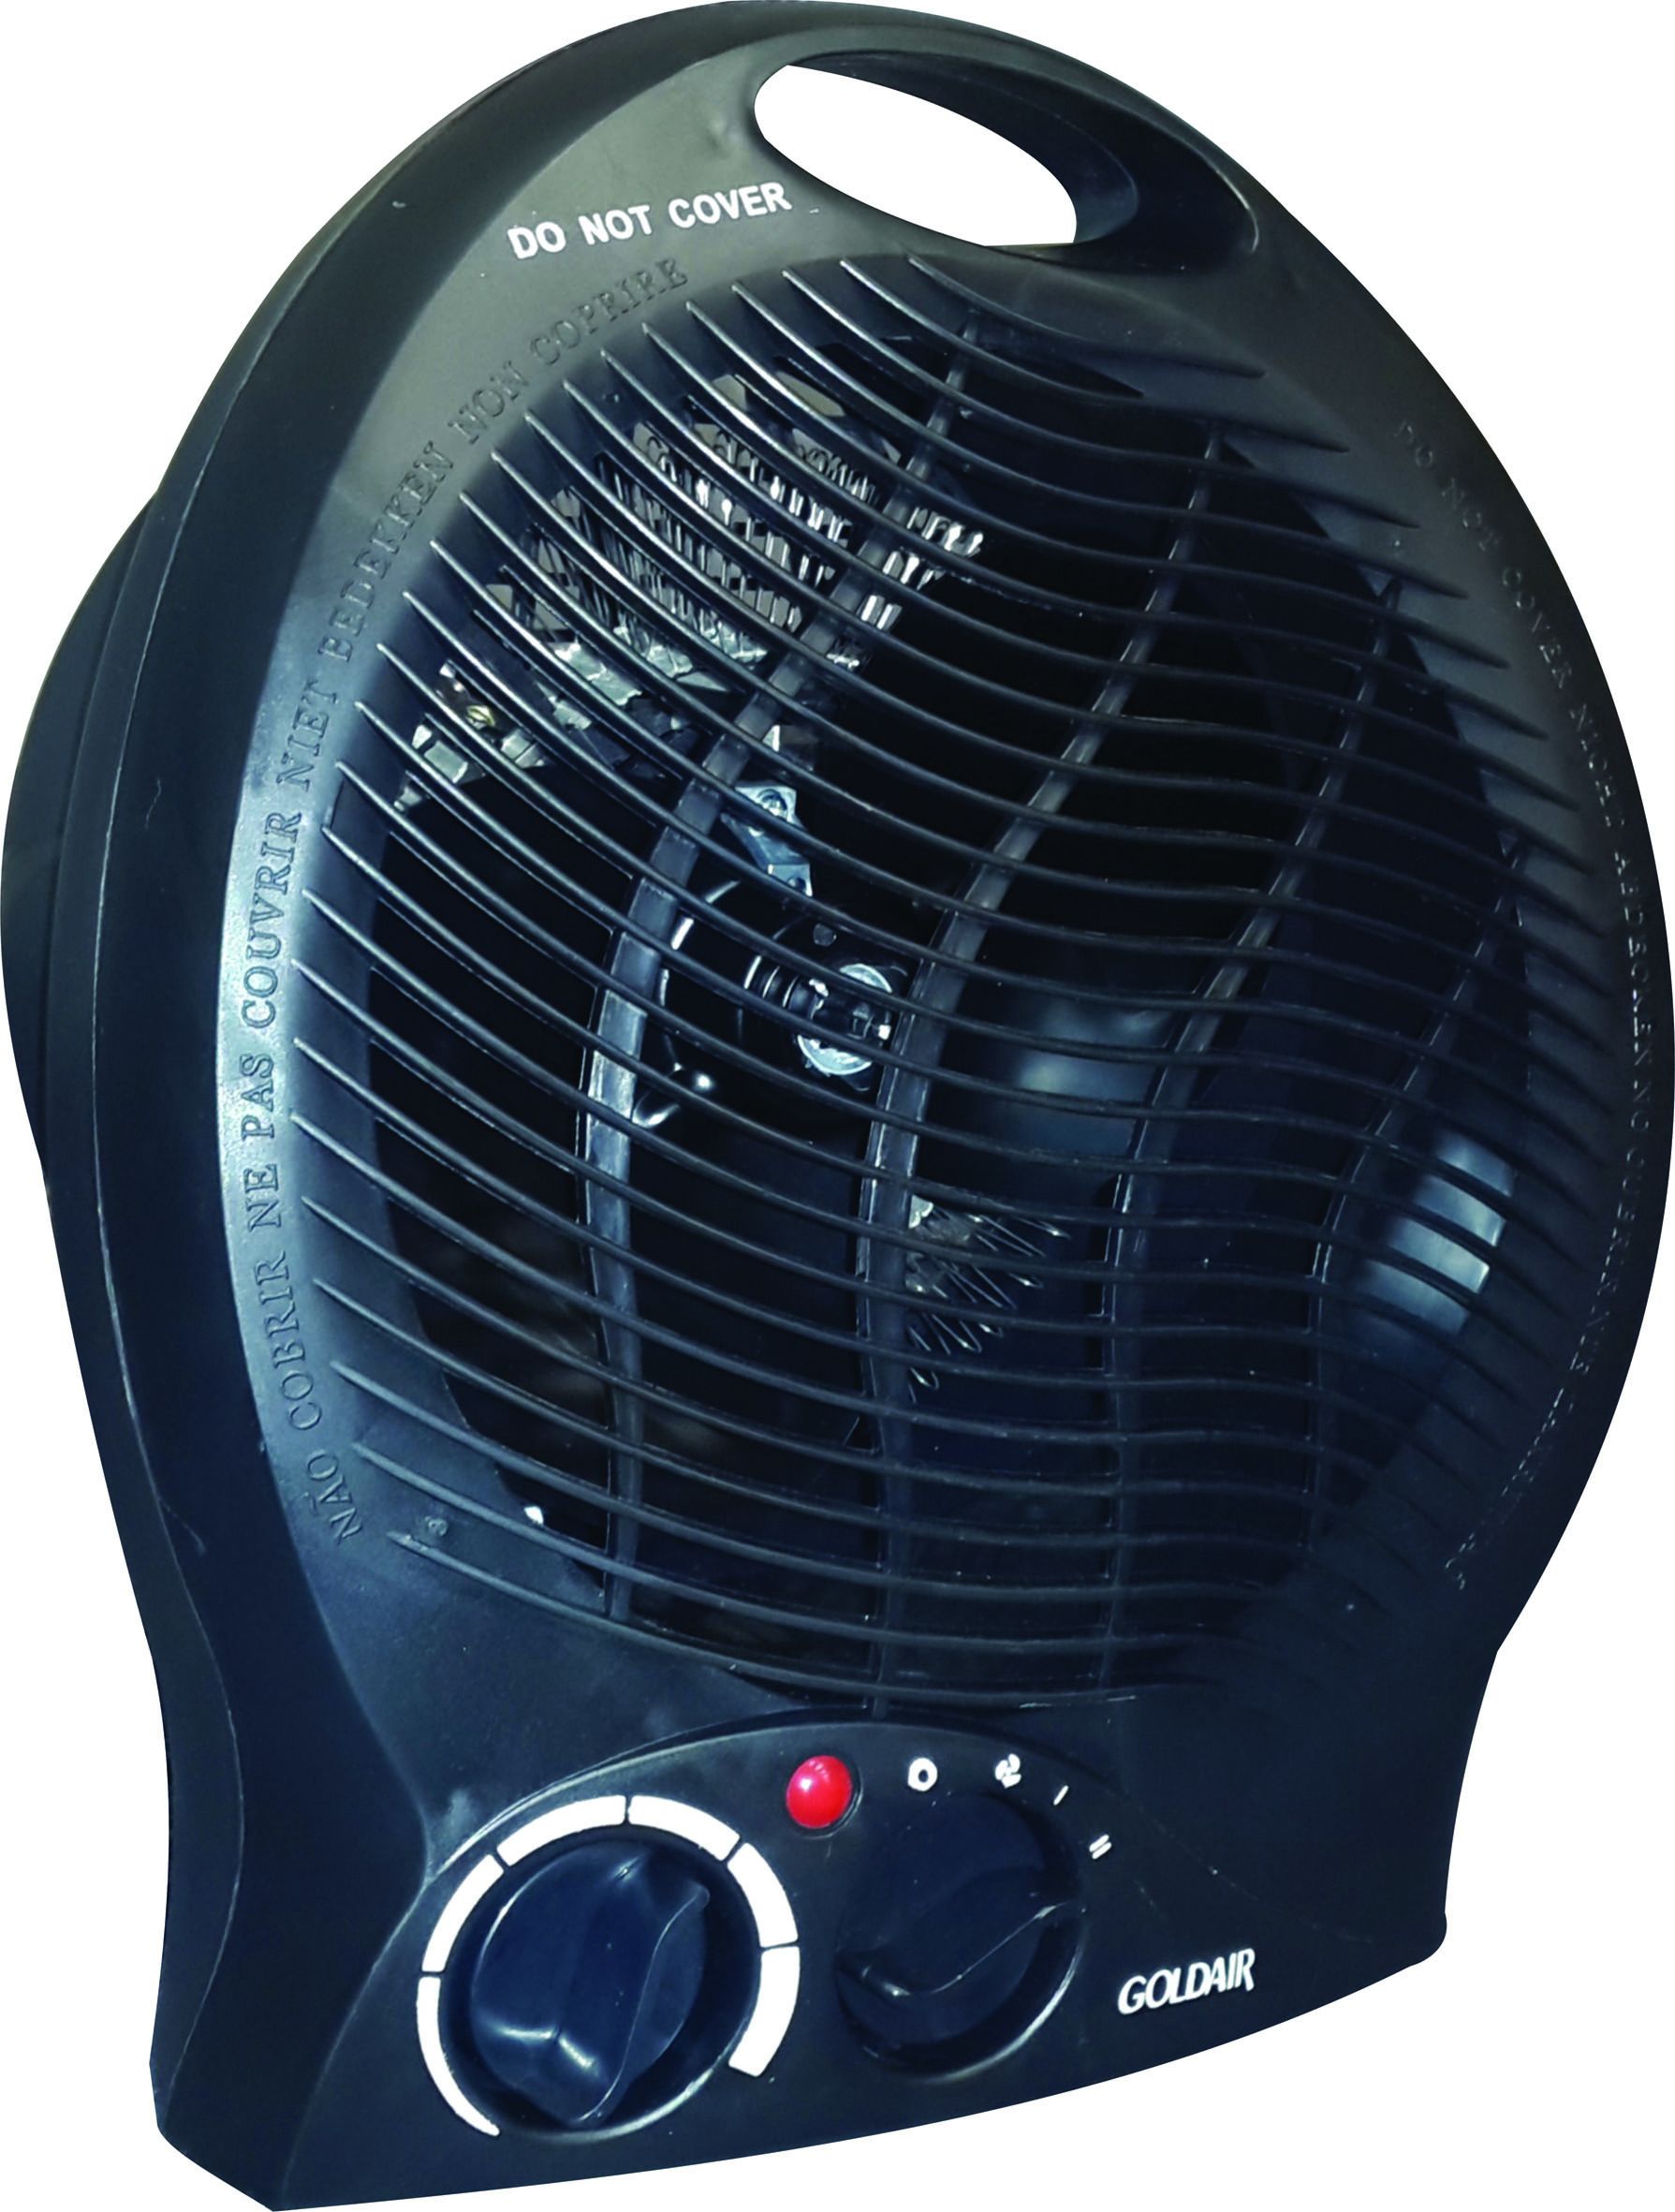 Goldair Black Fan Heater - Chamberlain